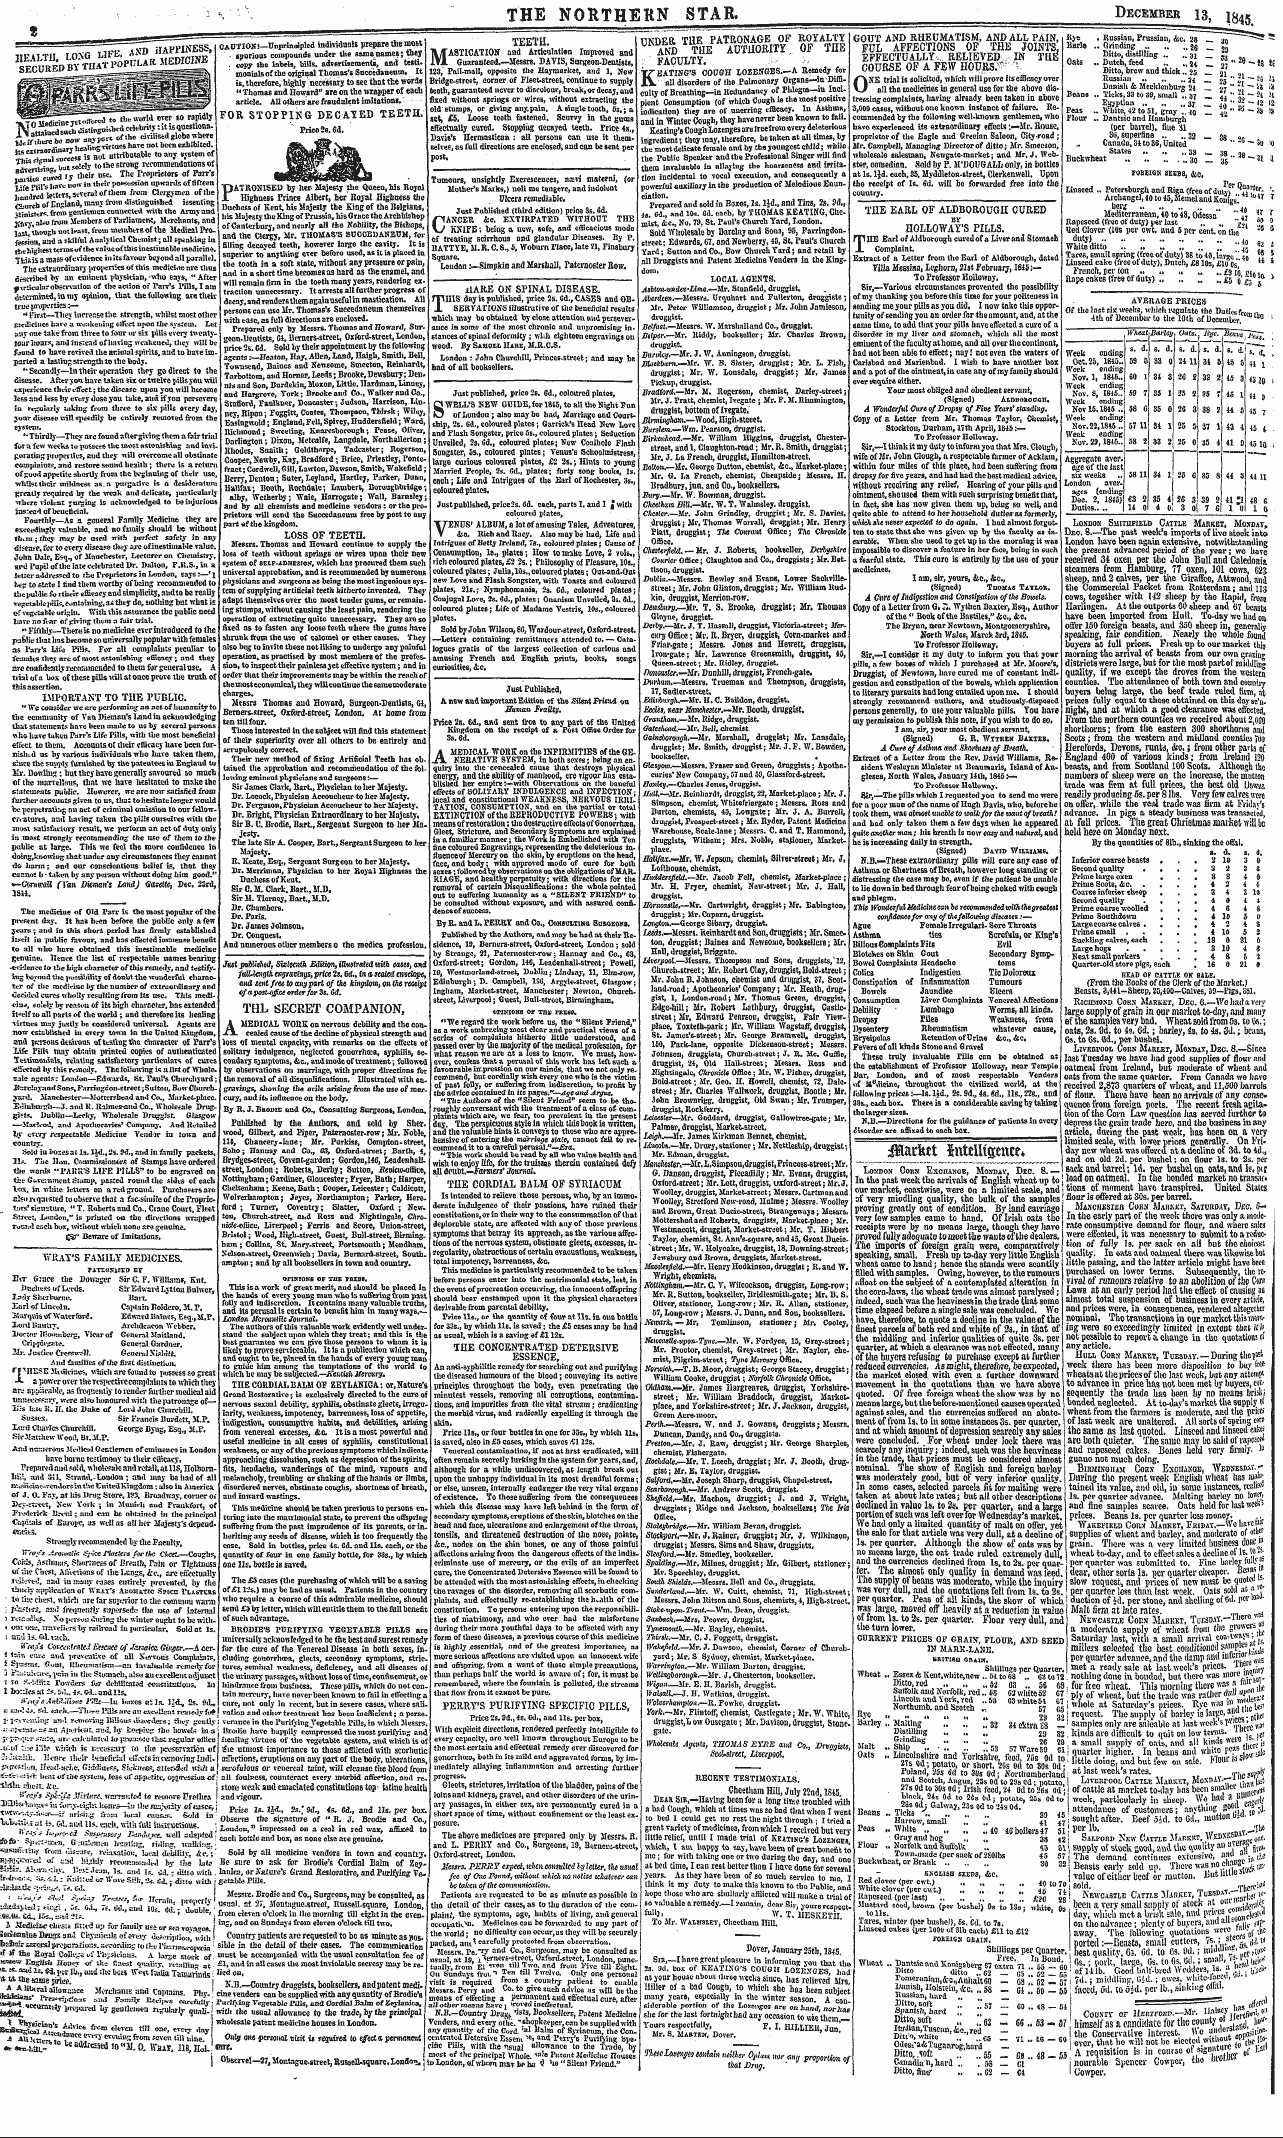 Northern Star (1837-1852): jS F Y, 3rd edition - London Corn Exchange , Monday, Dec. 8.— ...